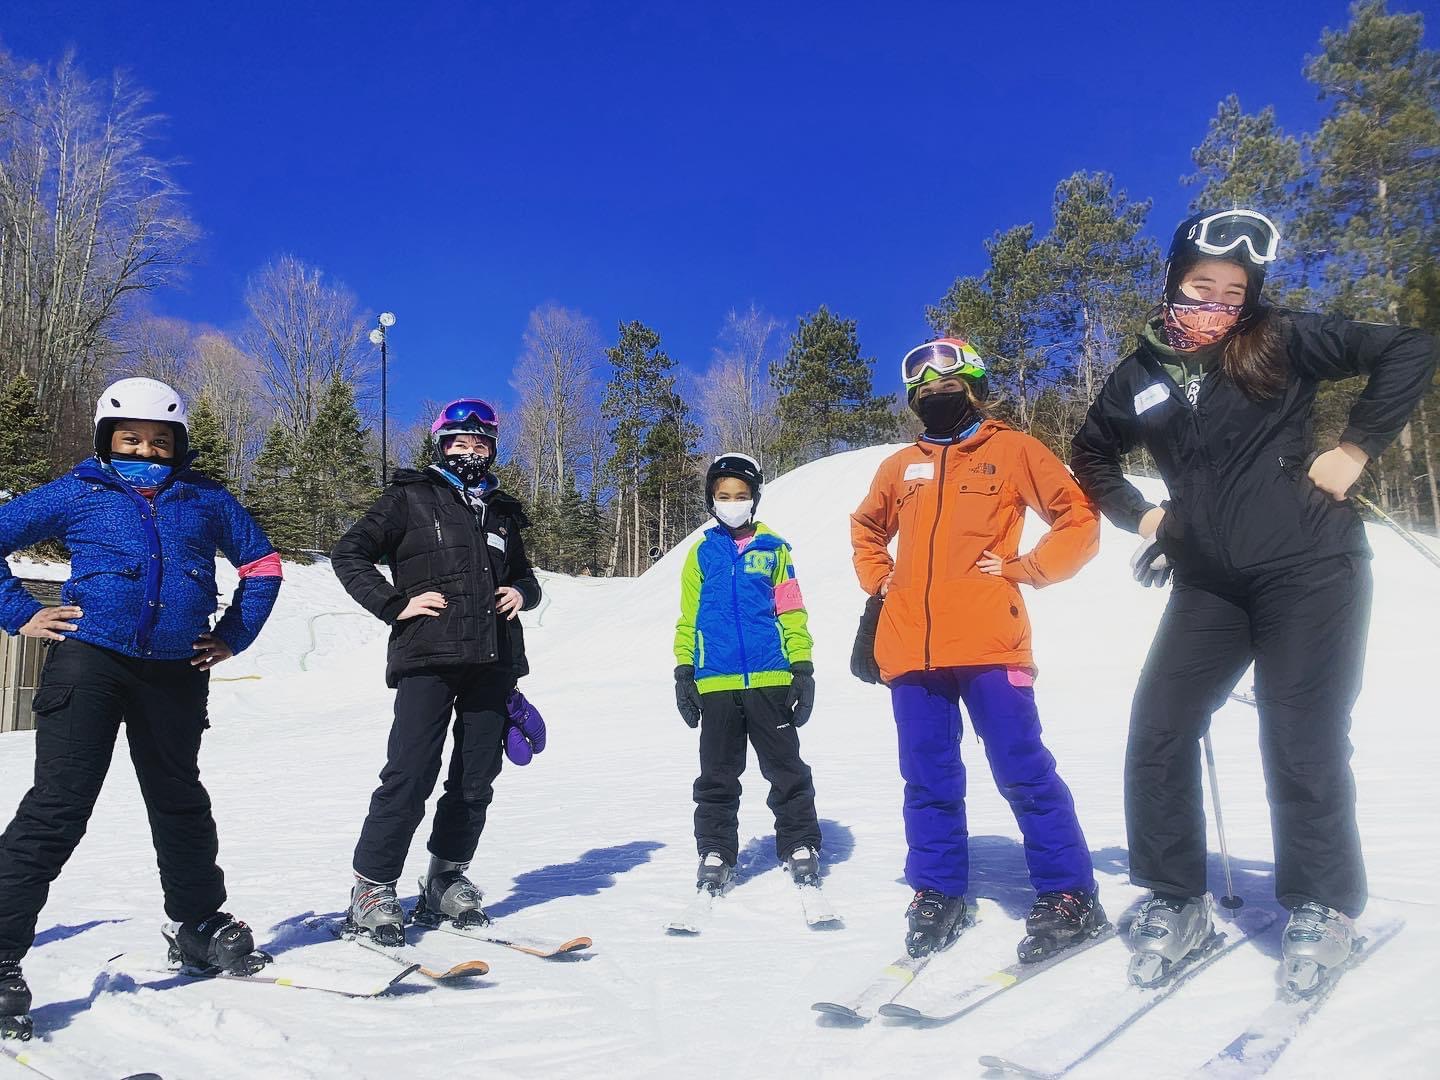 Youth Skiing